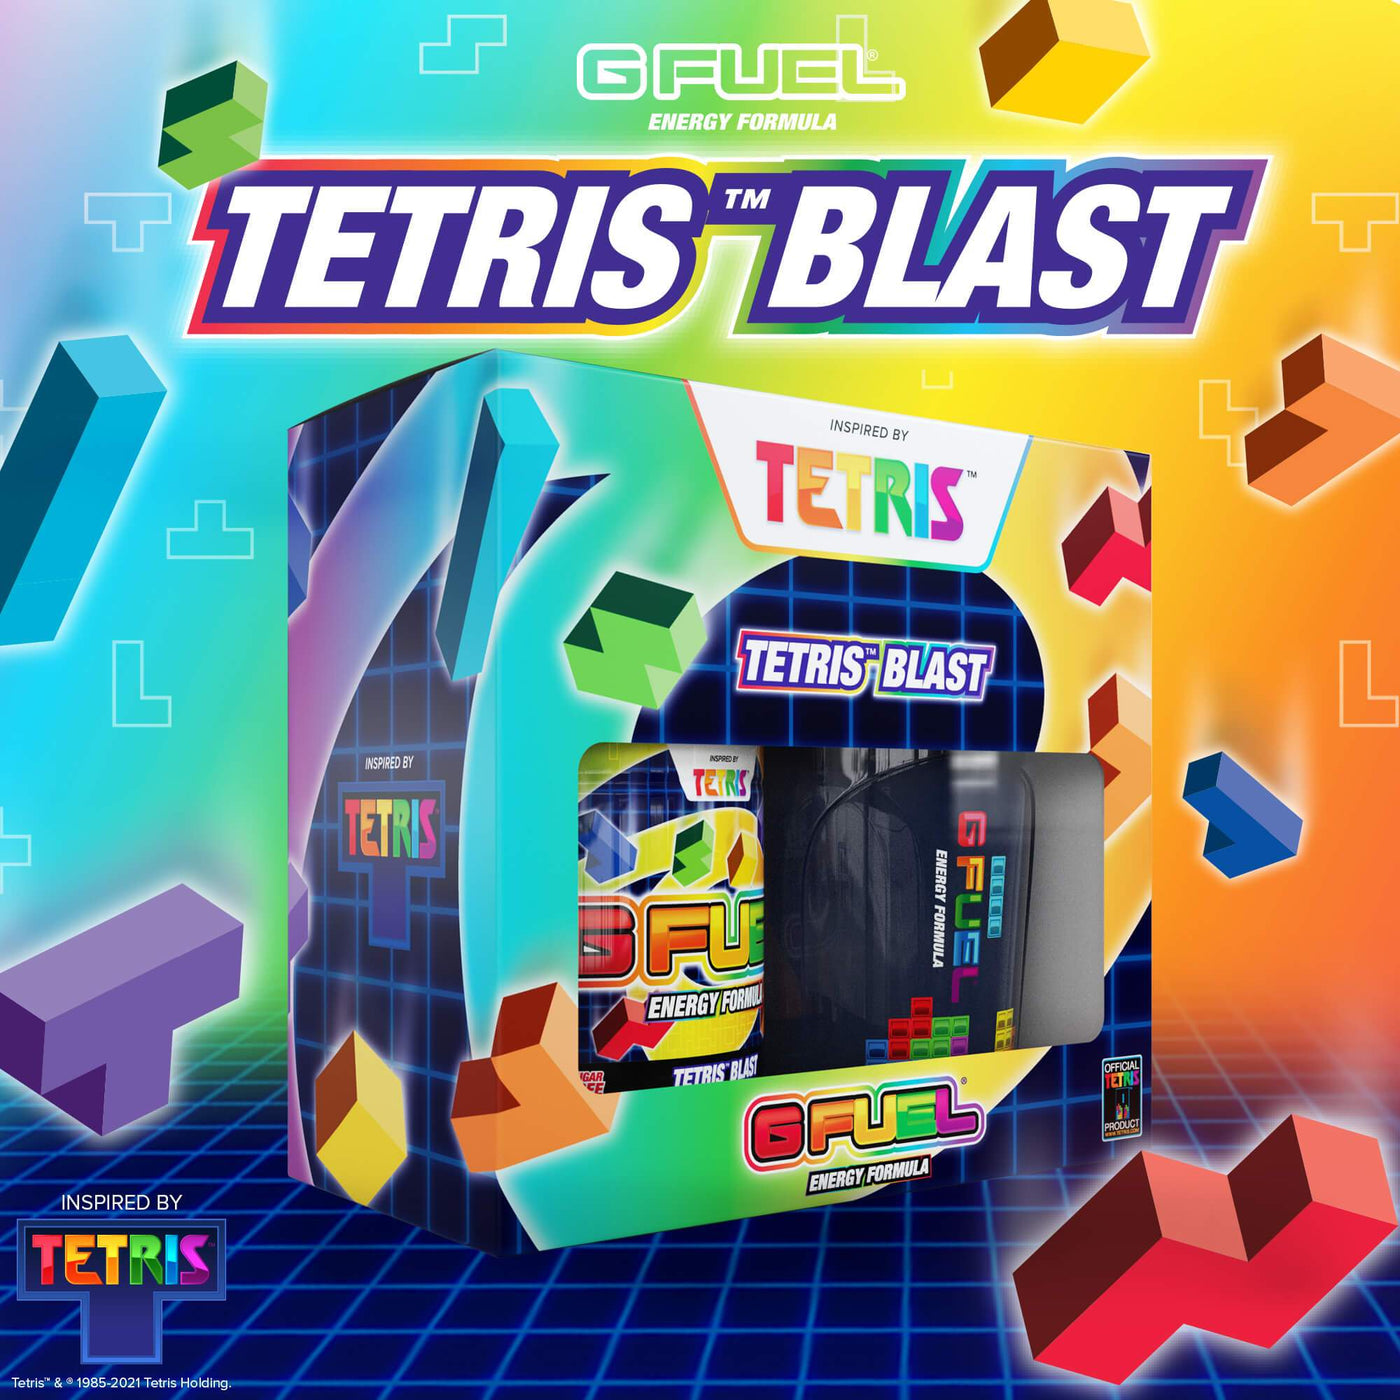 G FUEL Tetris Blast energy drink collector's box includes a 40-serving Tetris Blast tub and 16 oz Tetris shaker cup.